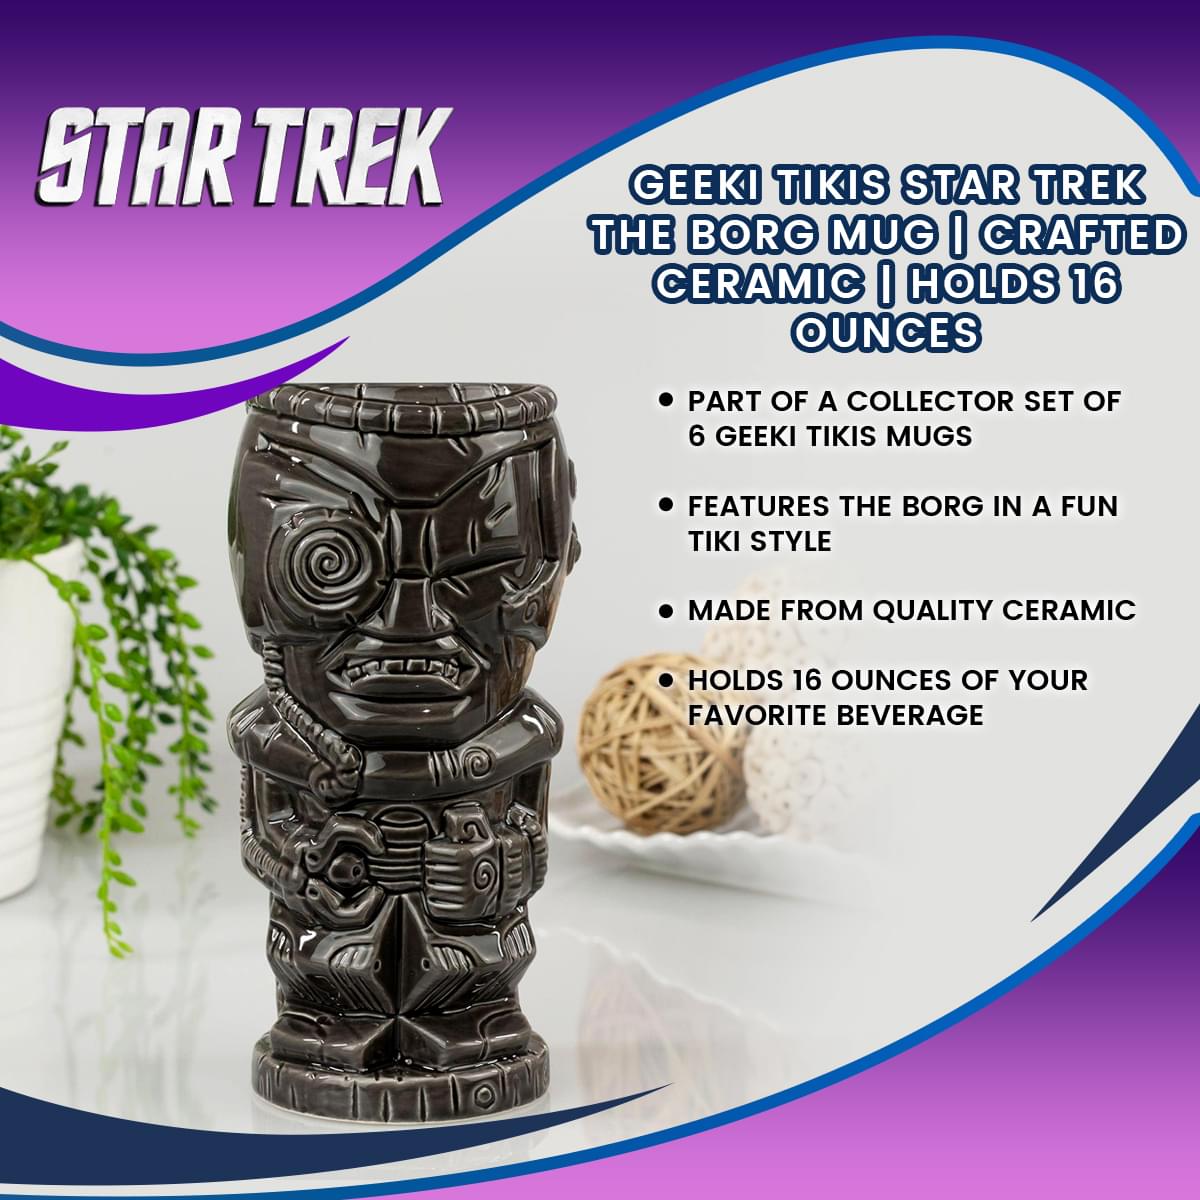 Geeki Tikis Star Trek: The Next Generation Borg Ceramic Mug | Holds 14 Ounces